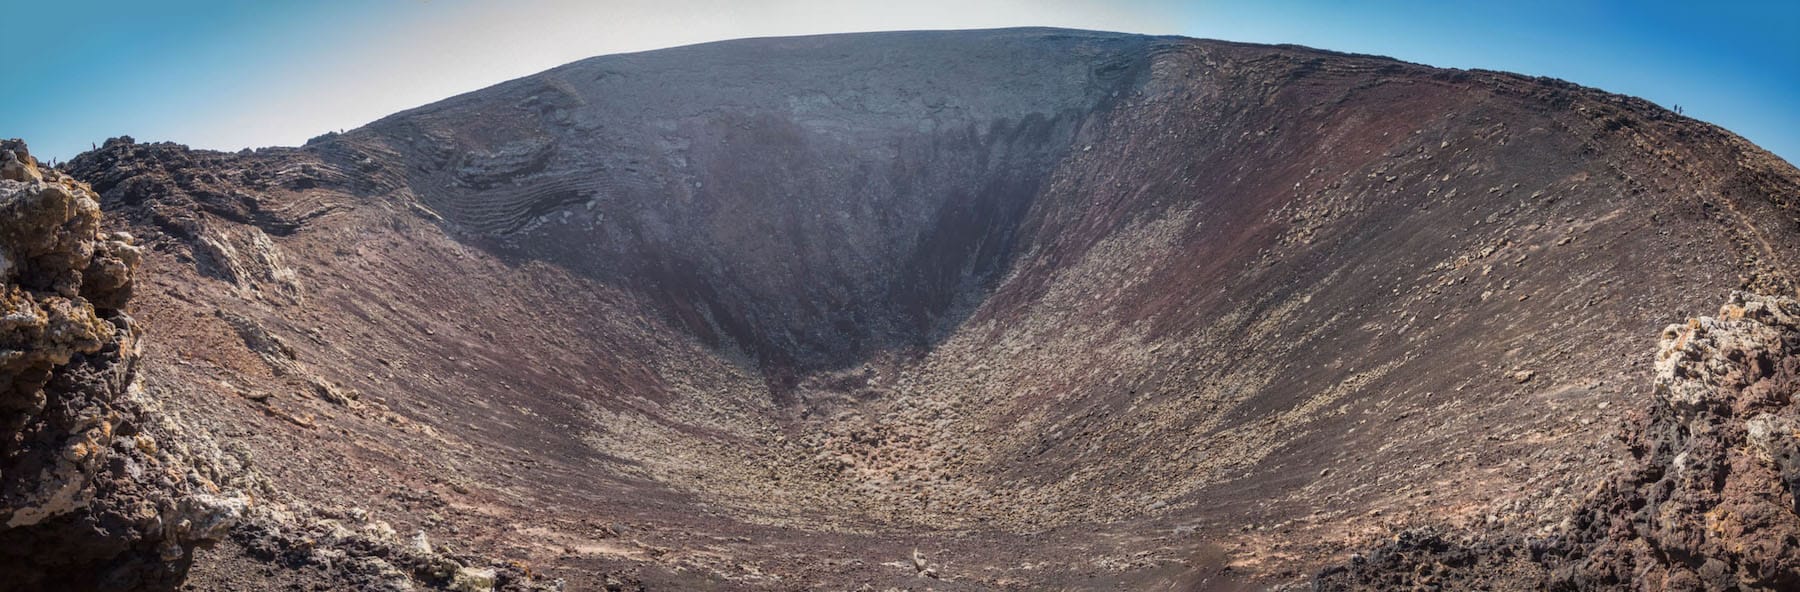 De krater van Calderon Hondo